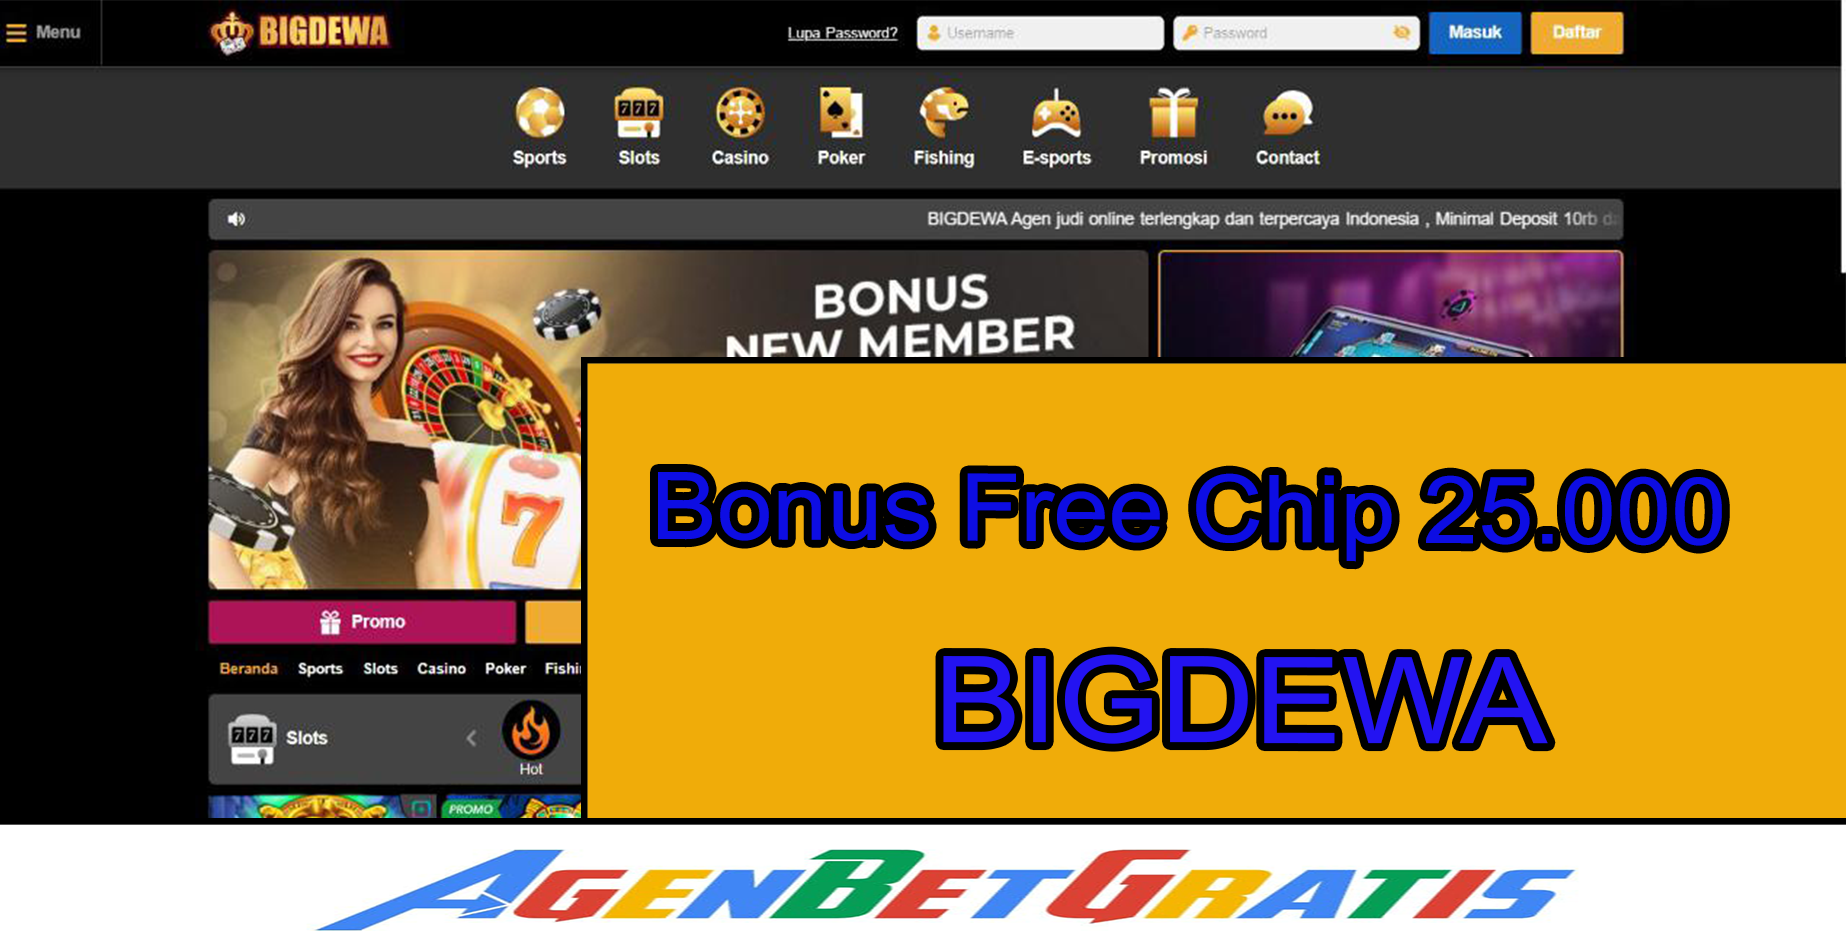 BIGDEWA- Bonus Free Chip 25.000